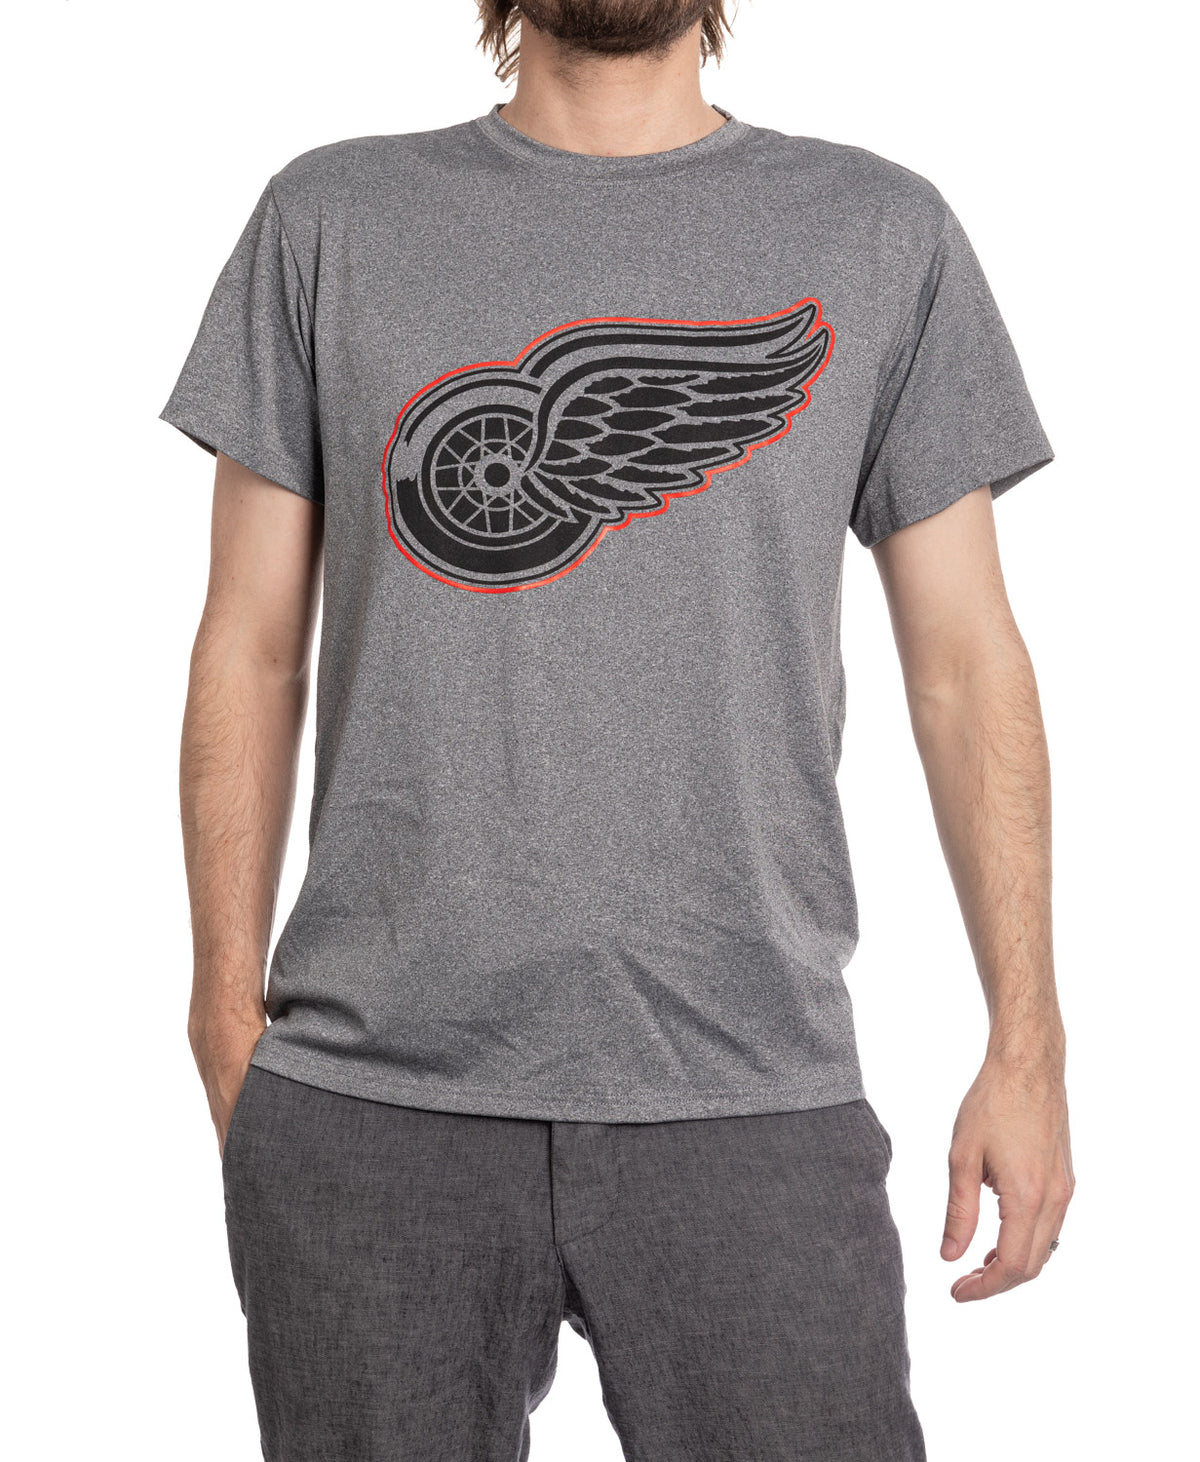 Detroit Red Wings NHL Men's Performance Rash Guard Base Layer Moisture-Wicking T-Shirt - Grey